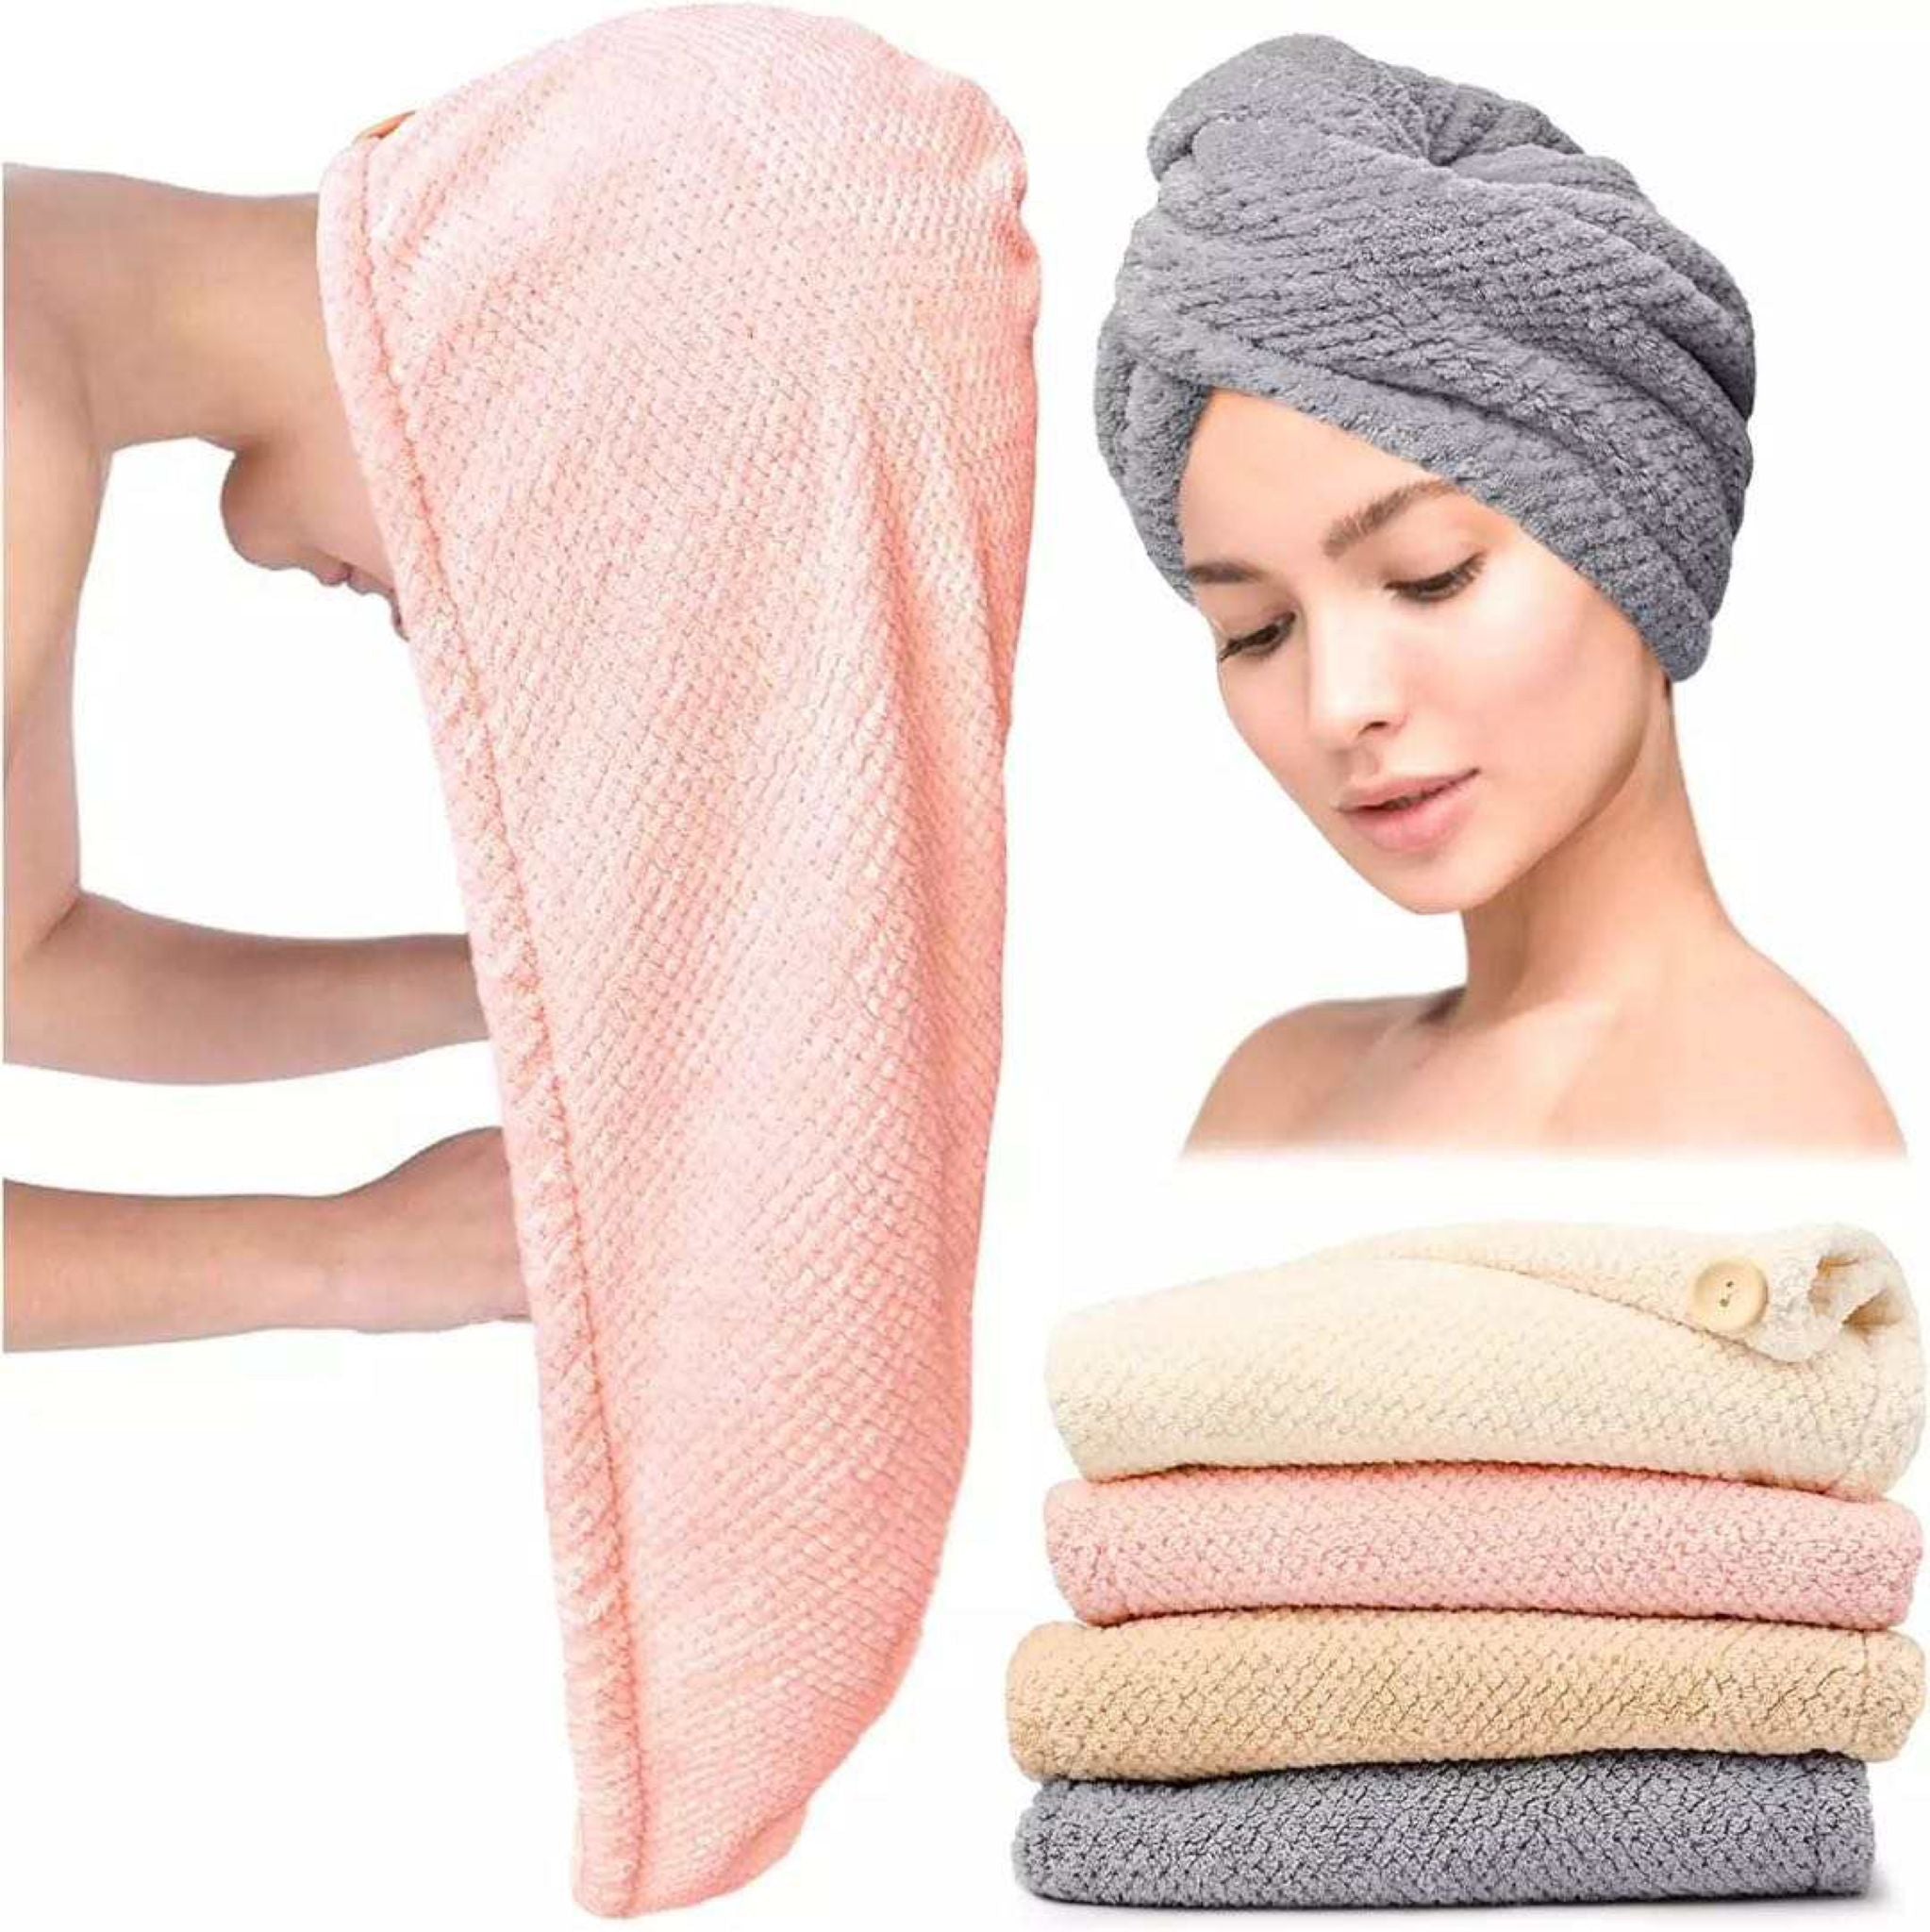 Hair towel Turban